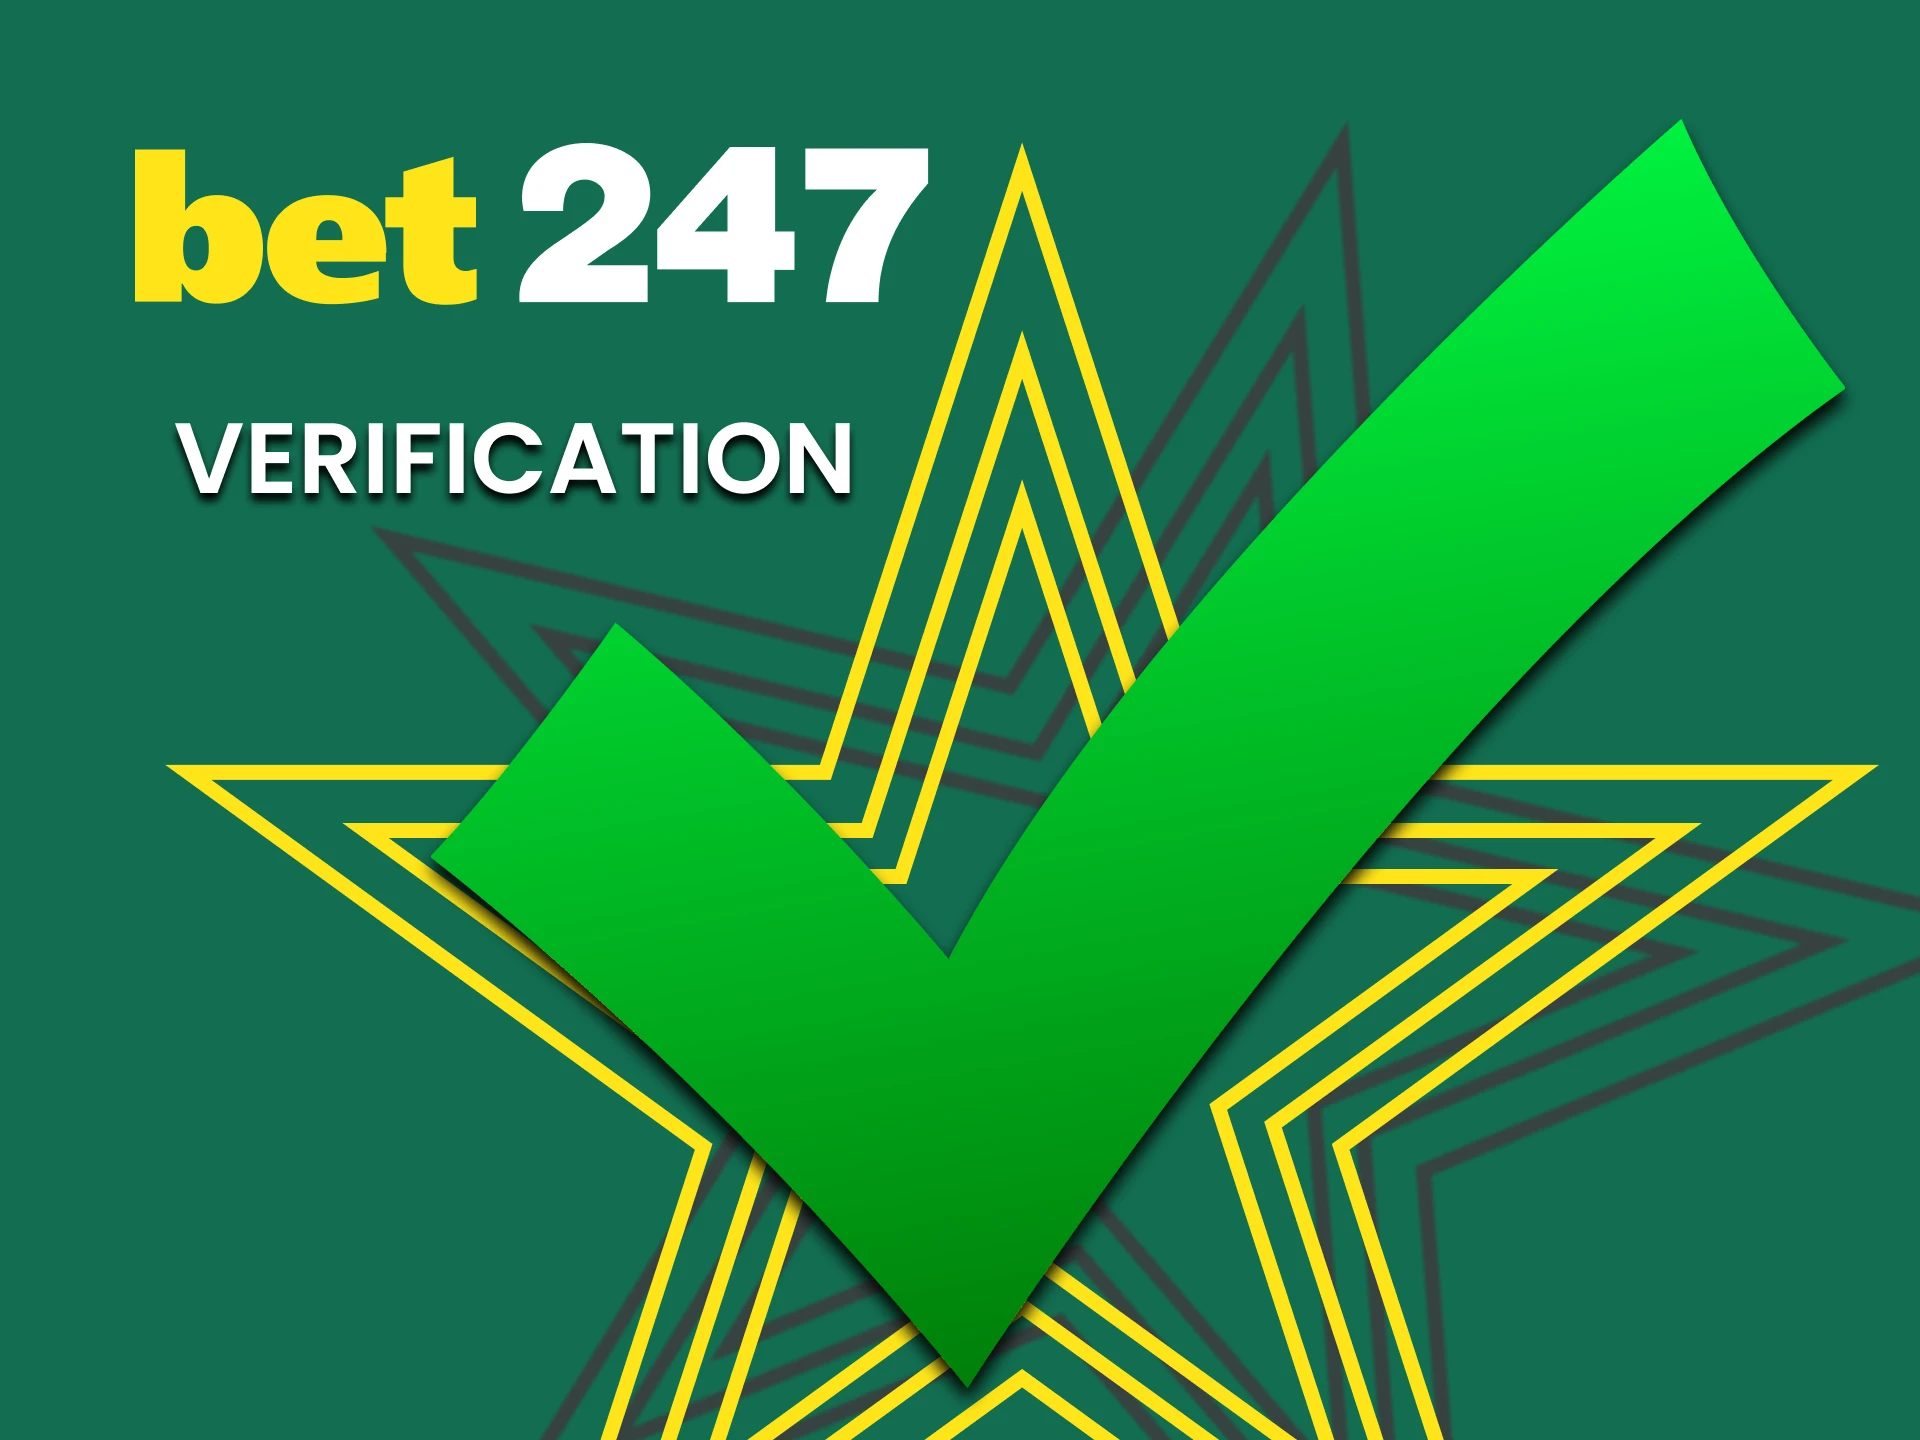 At Bet247, go through a simple verification process.